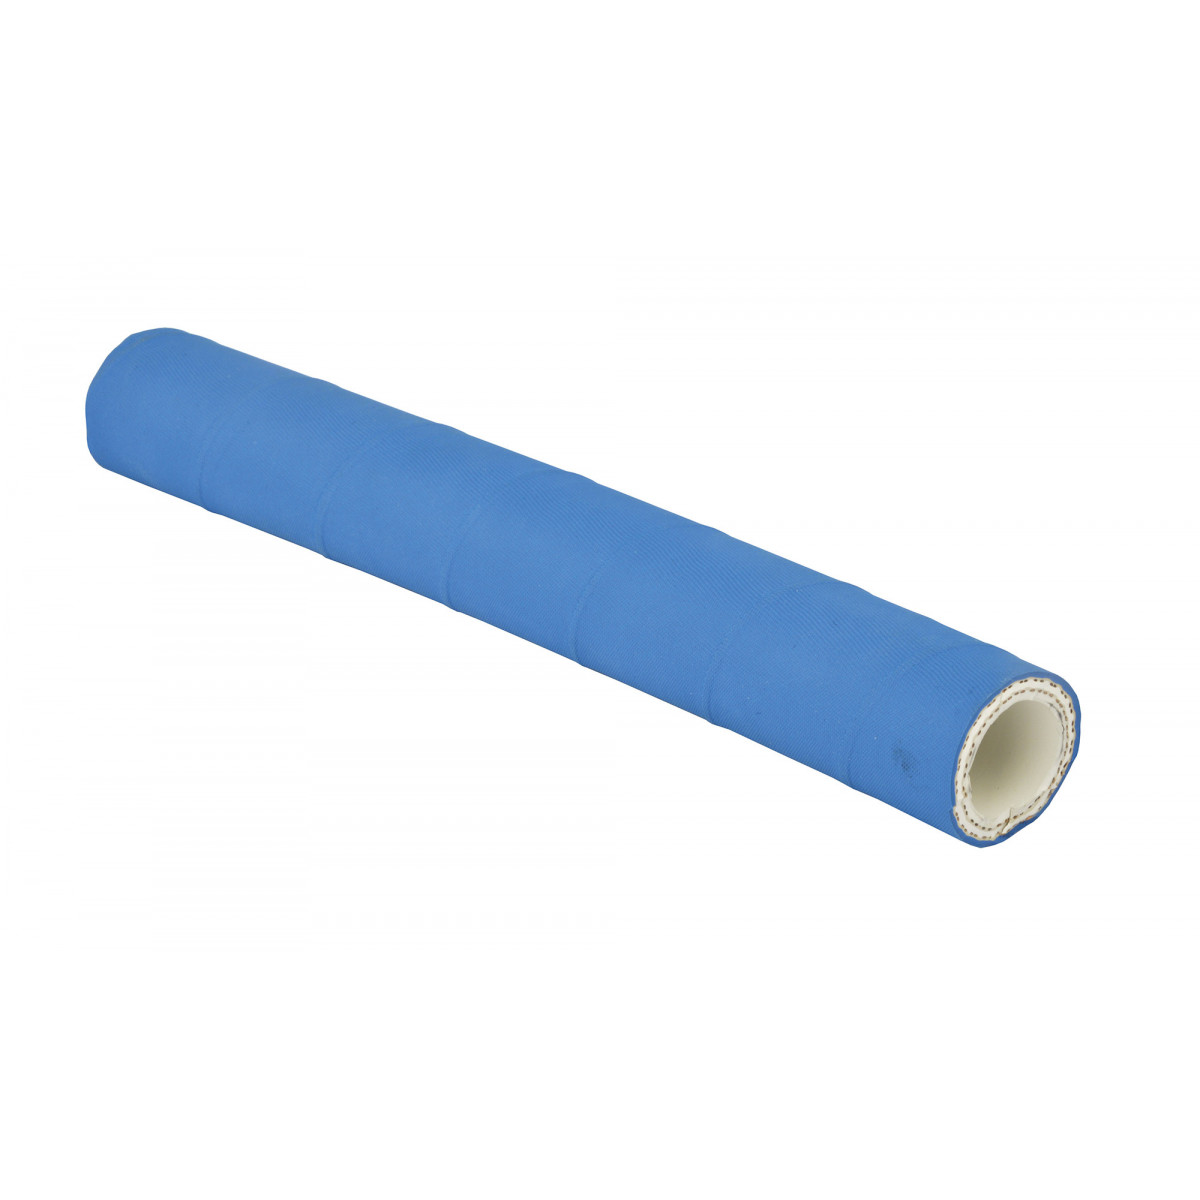 Rubber hose for liquids with a high alcohol content, 19 mm diameter, per meter